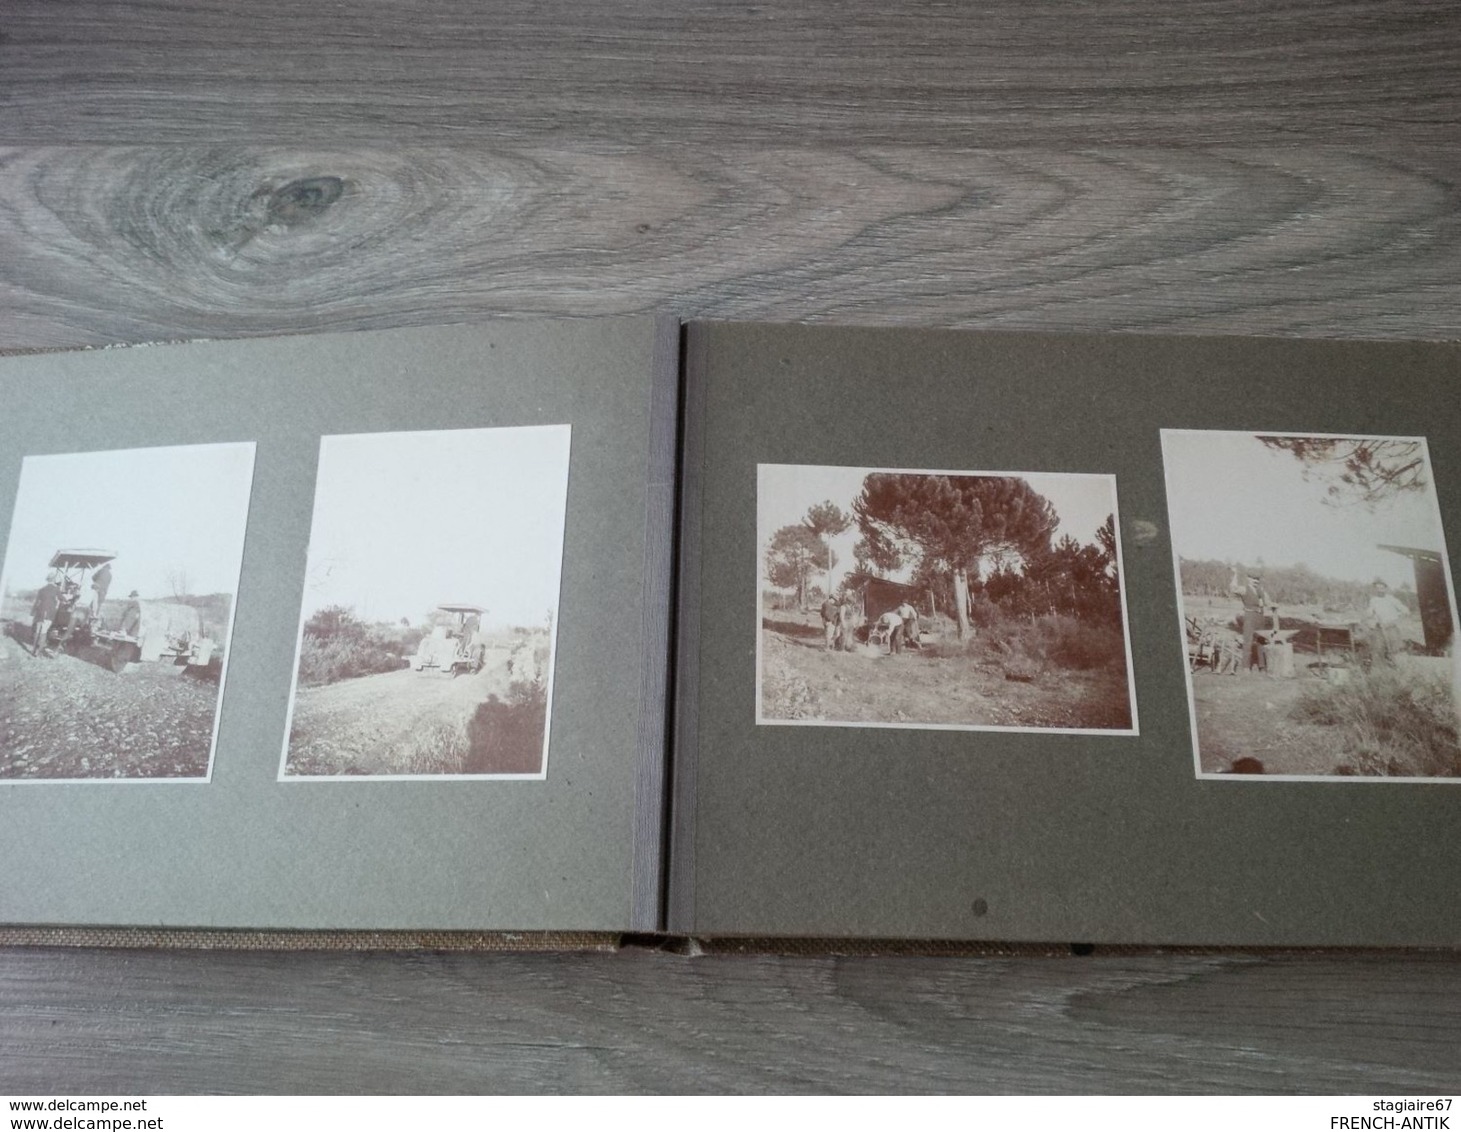 ALBUM DE FAMILLE LIEUX A IDENTIFIER METIER CONSTRUCTION AUTOCHENILLE RECOLTE 77 PHOTOS - Alben & Sammlungen